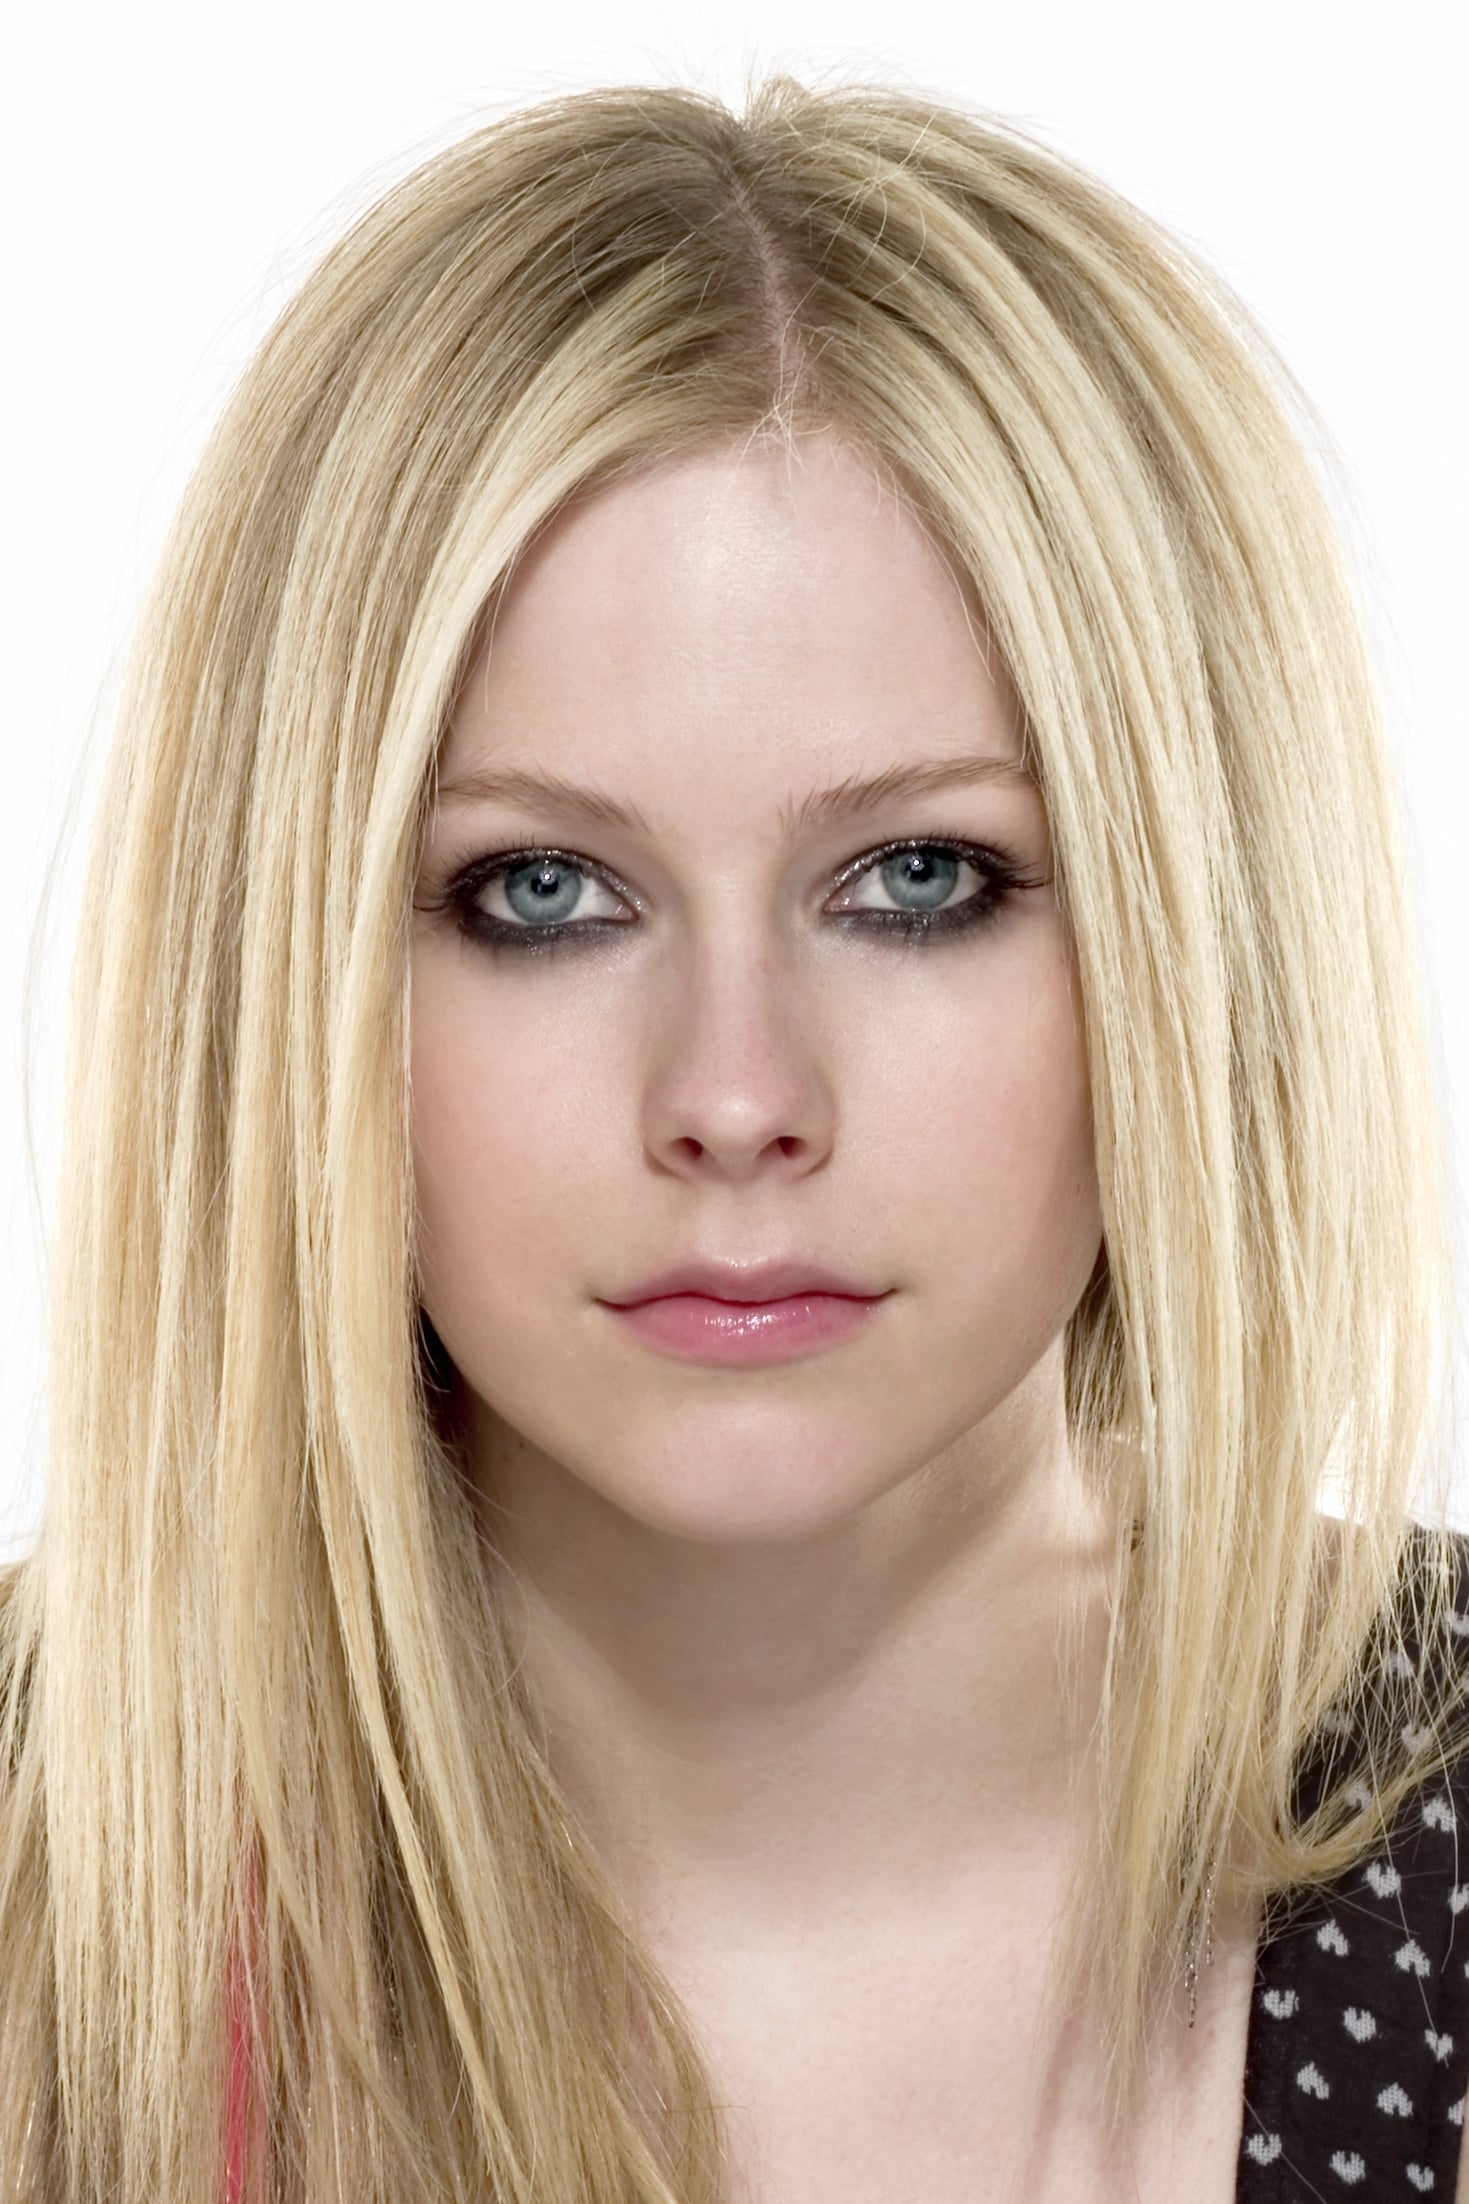 Age avril lavigne Avril Lavigne